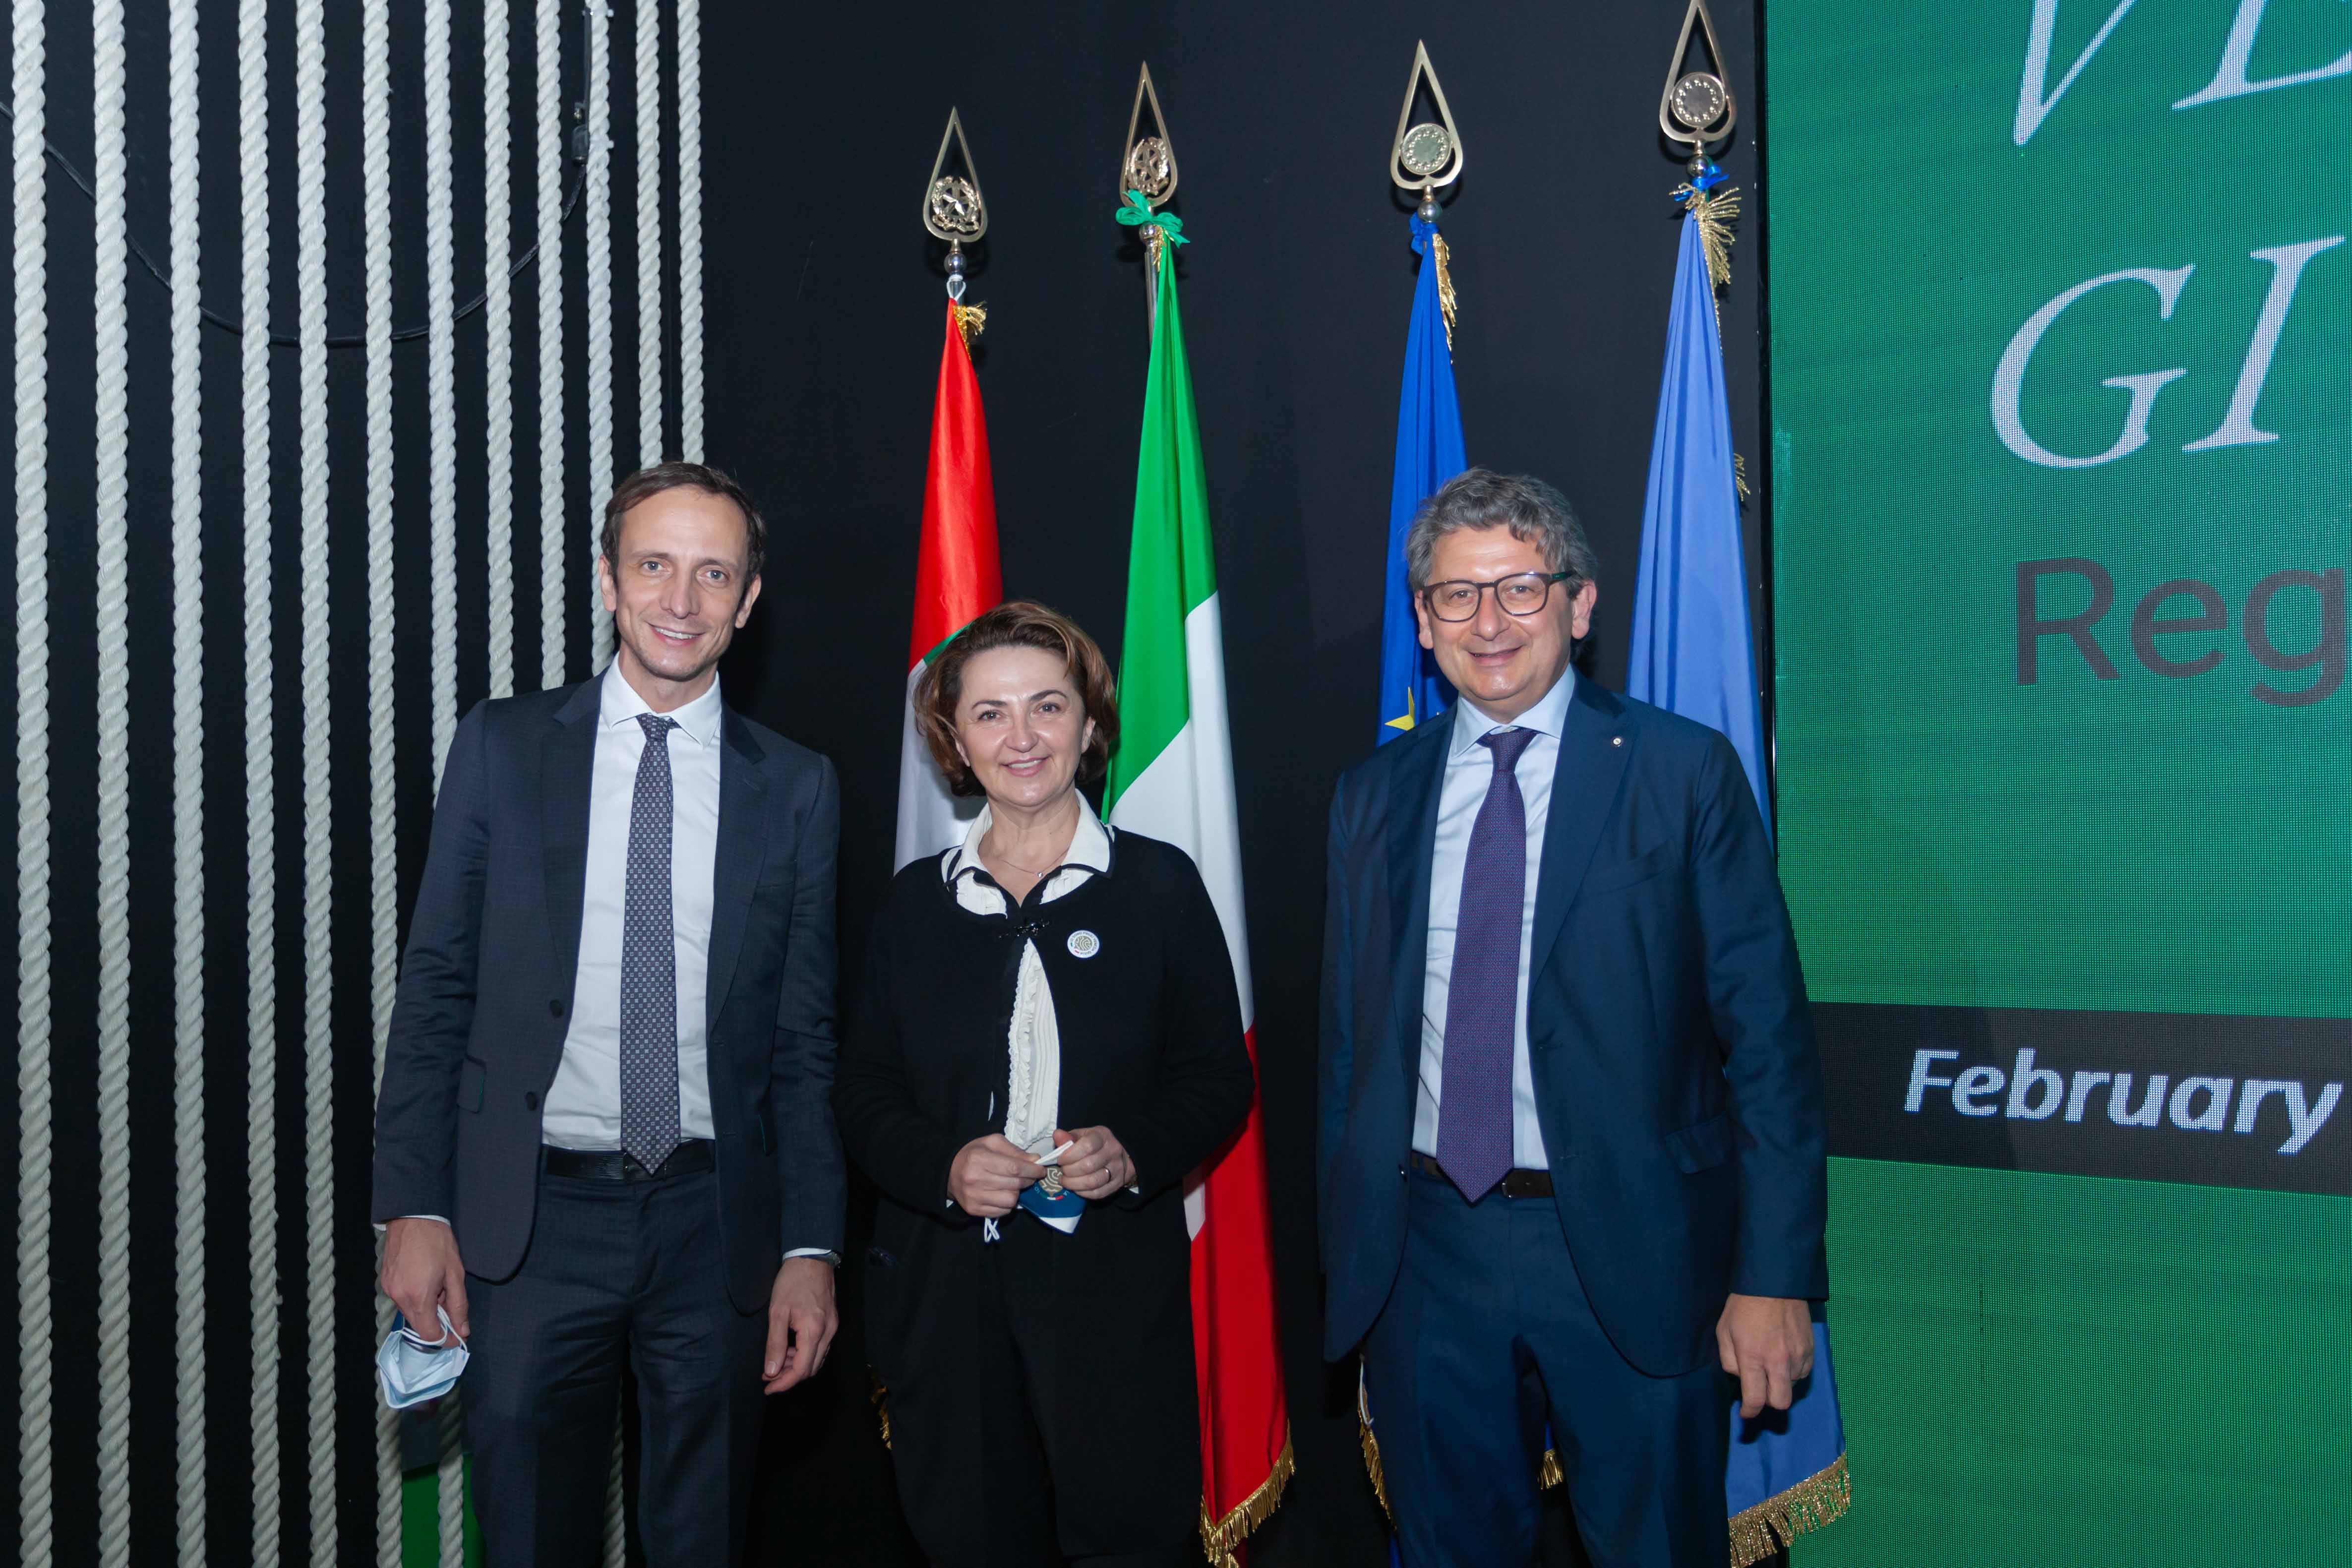 UNIDO ITPO Italy at the Friuli Venezia Giulia Regional Day of Expo 2020 Dubai